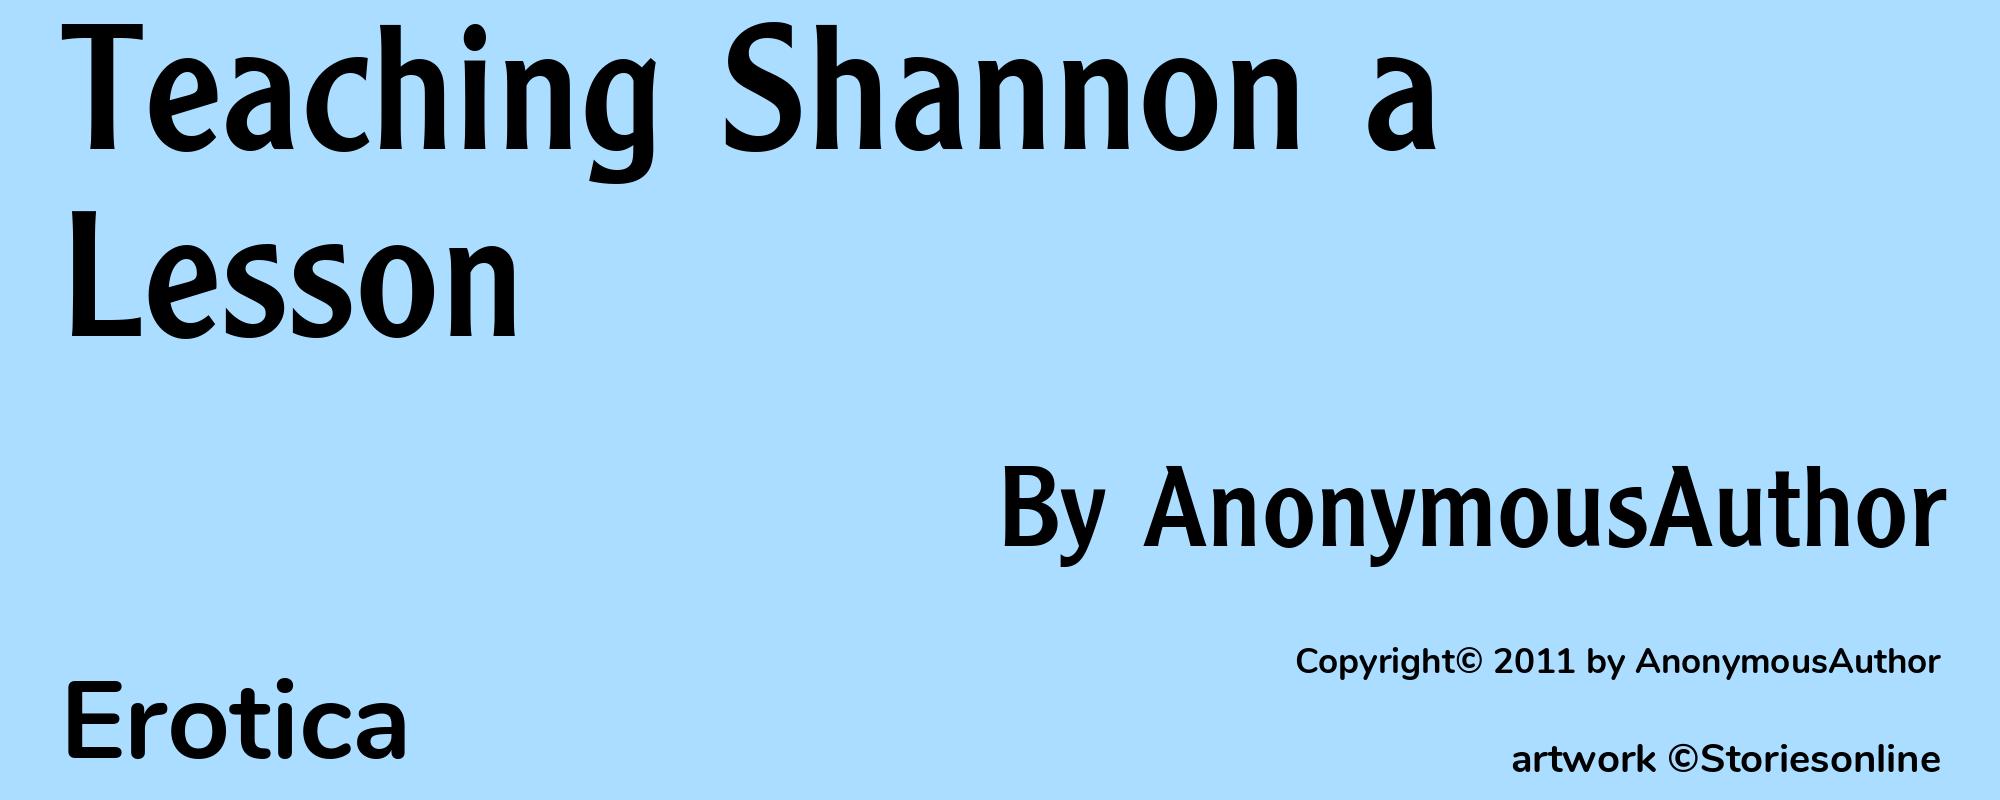 Teaching Shannon a Lesson - Cover